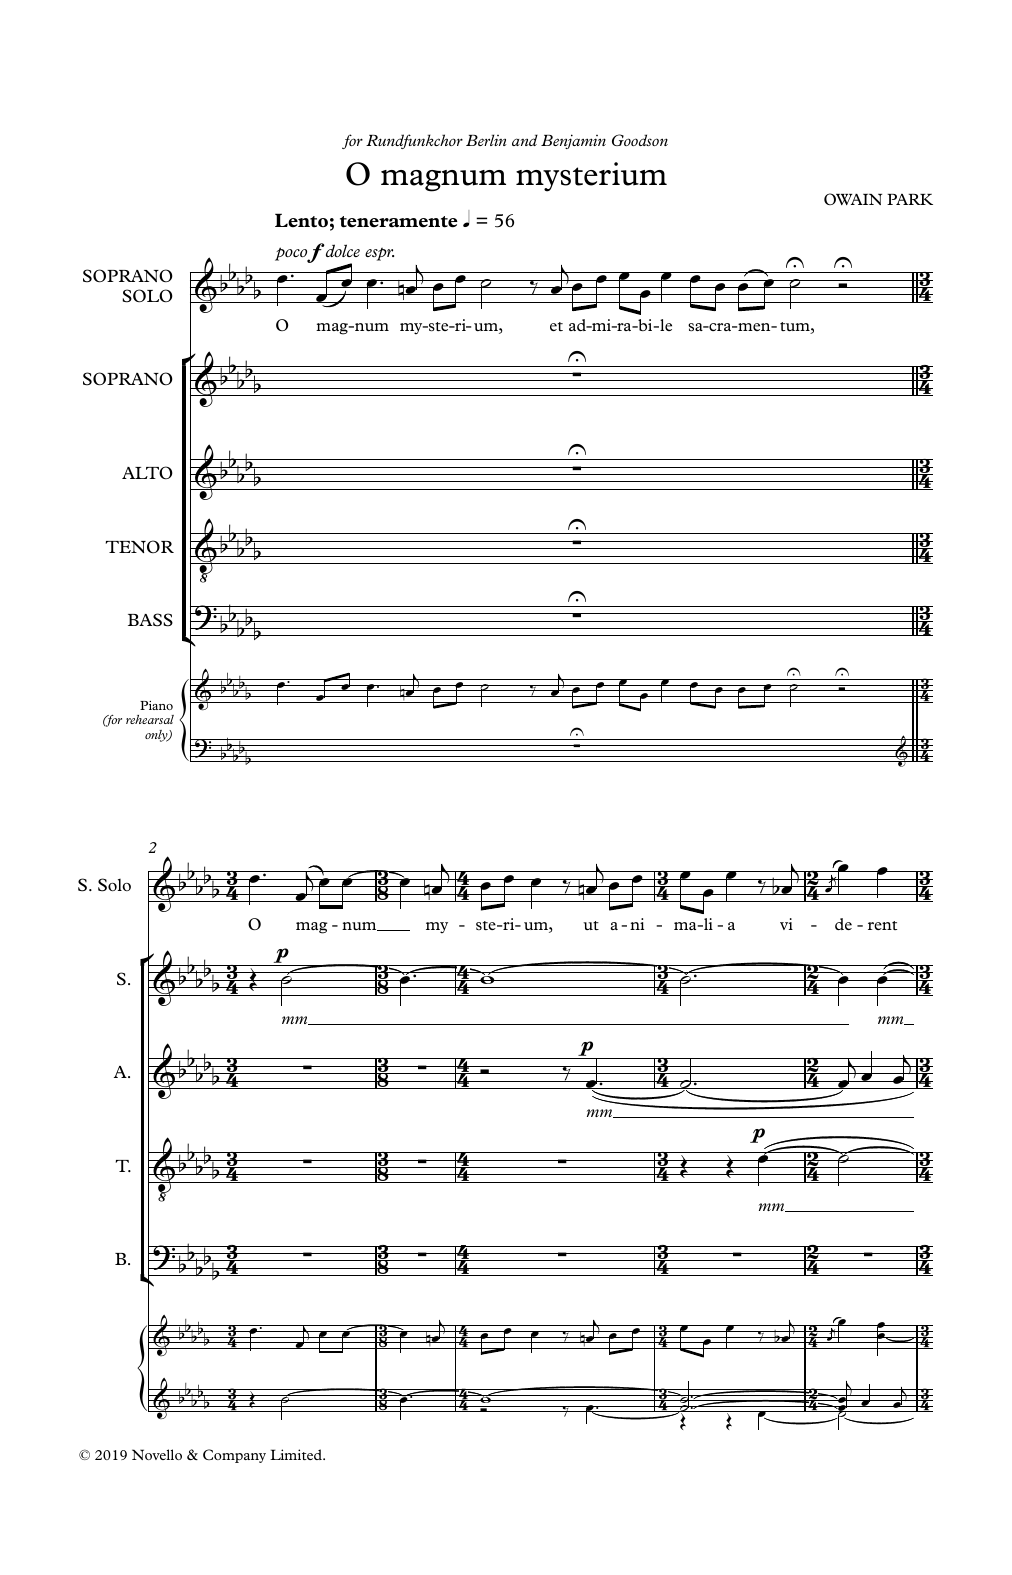 Owain Park O Magnum Mysterium Sheet Music Notes & Chords for SATB Choir - Download or Print PDF